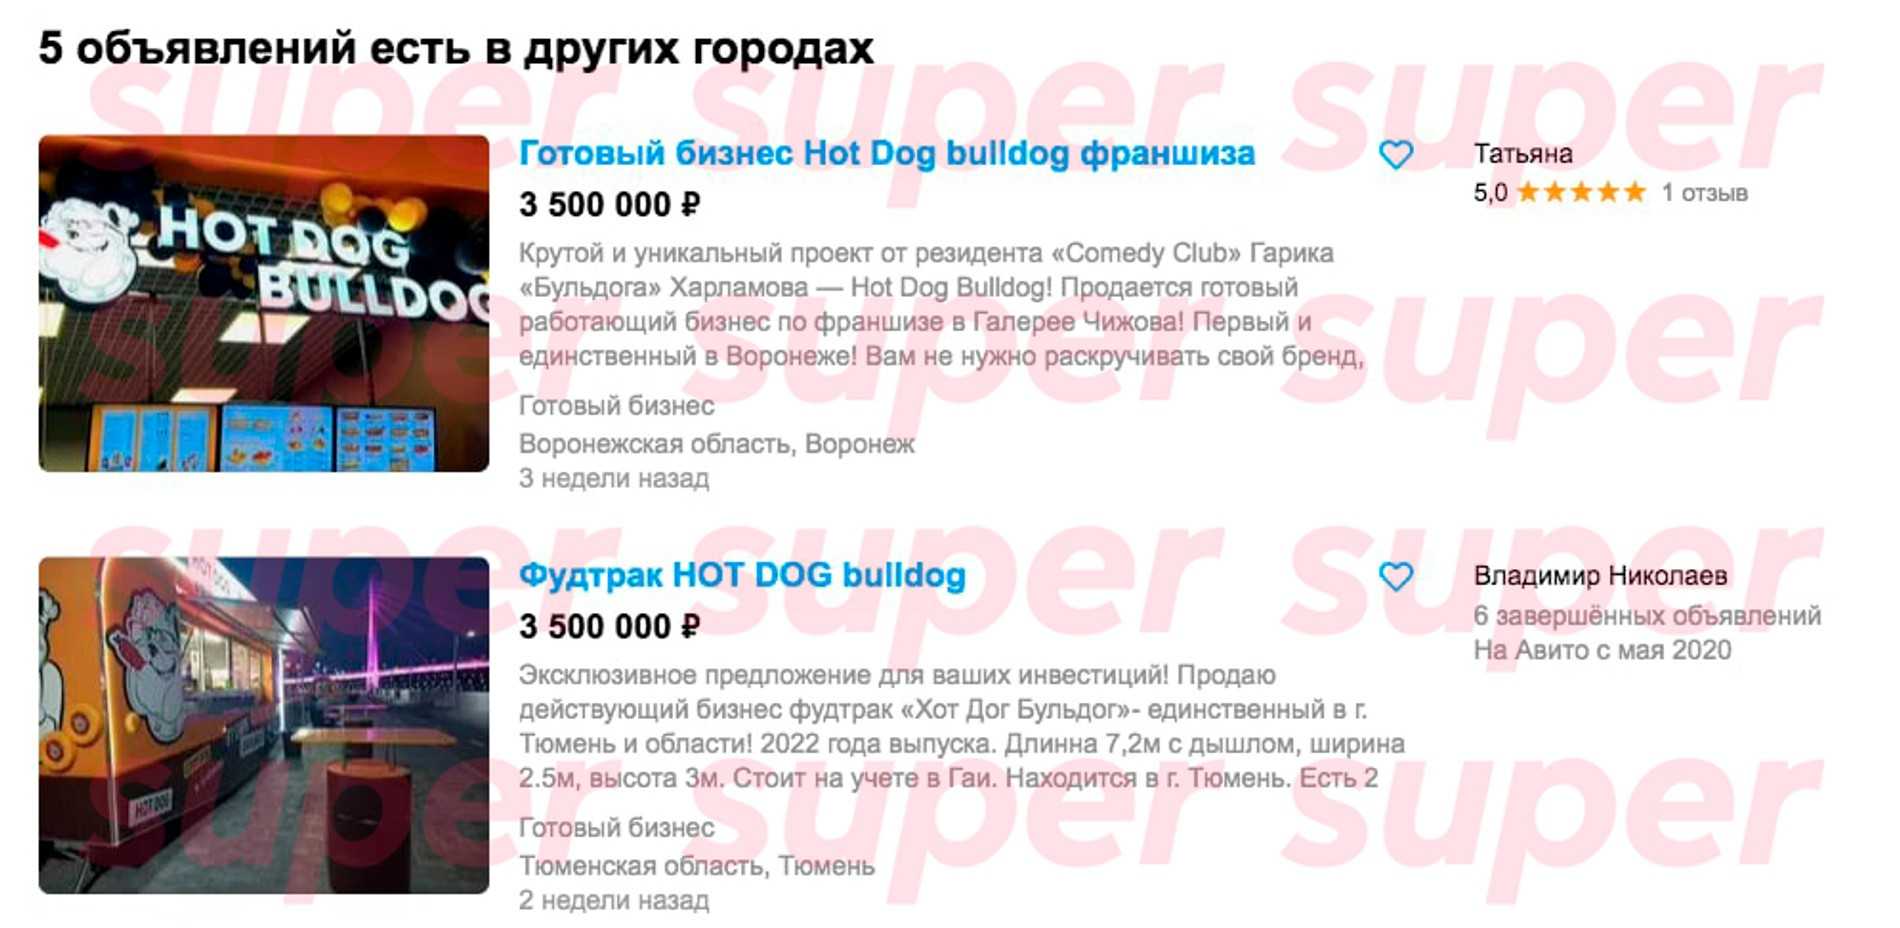 Свежие объявления о продаже франшизы Hot Dog Bulldog на «Авито»